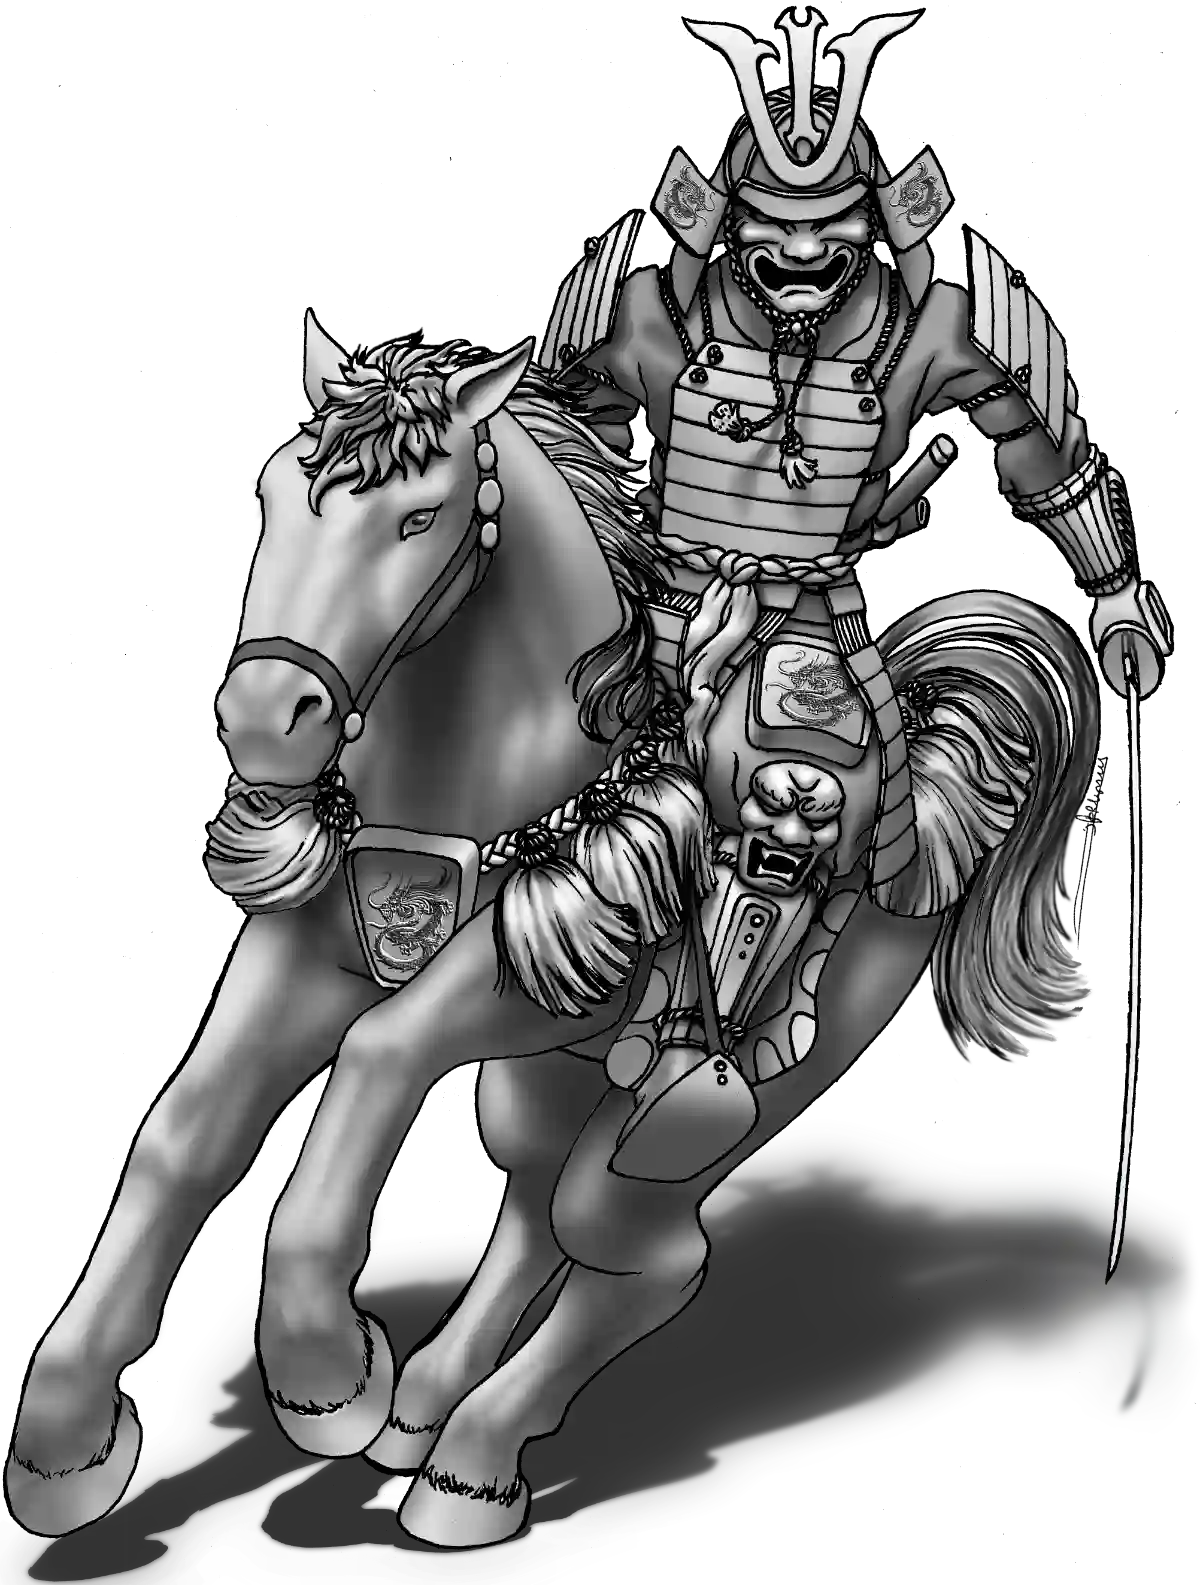 A samurai on horseback, charging.